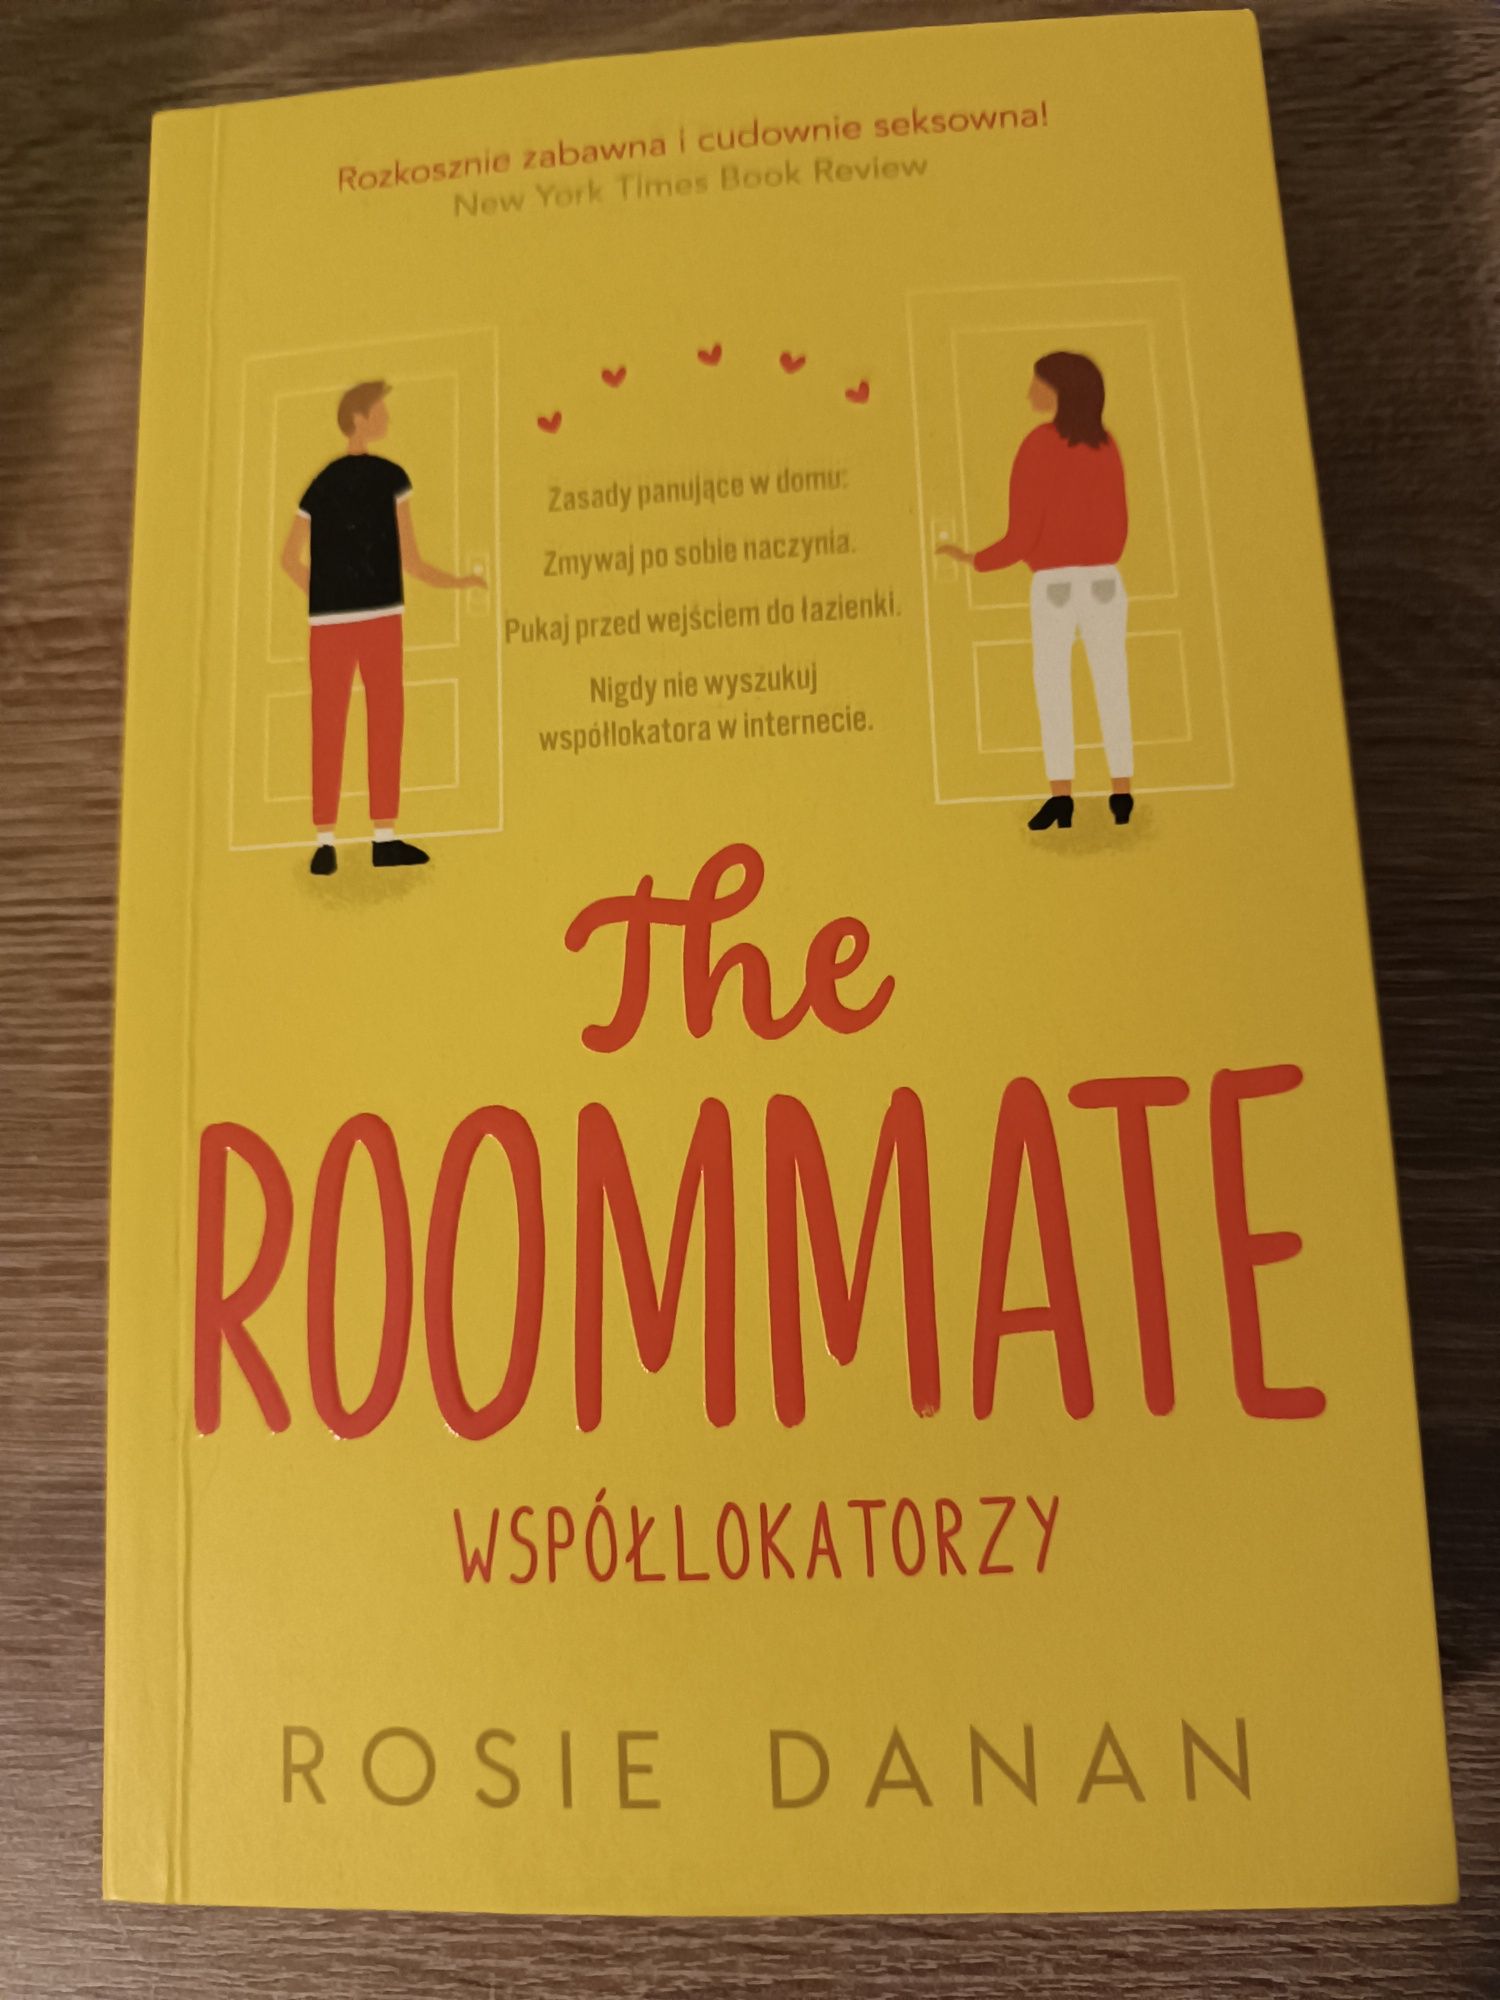 The roommate Współlokatorzy Rosie Danan